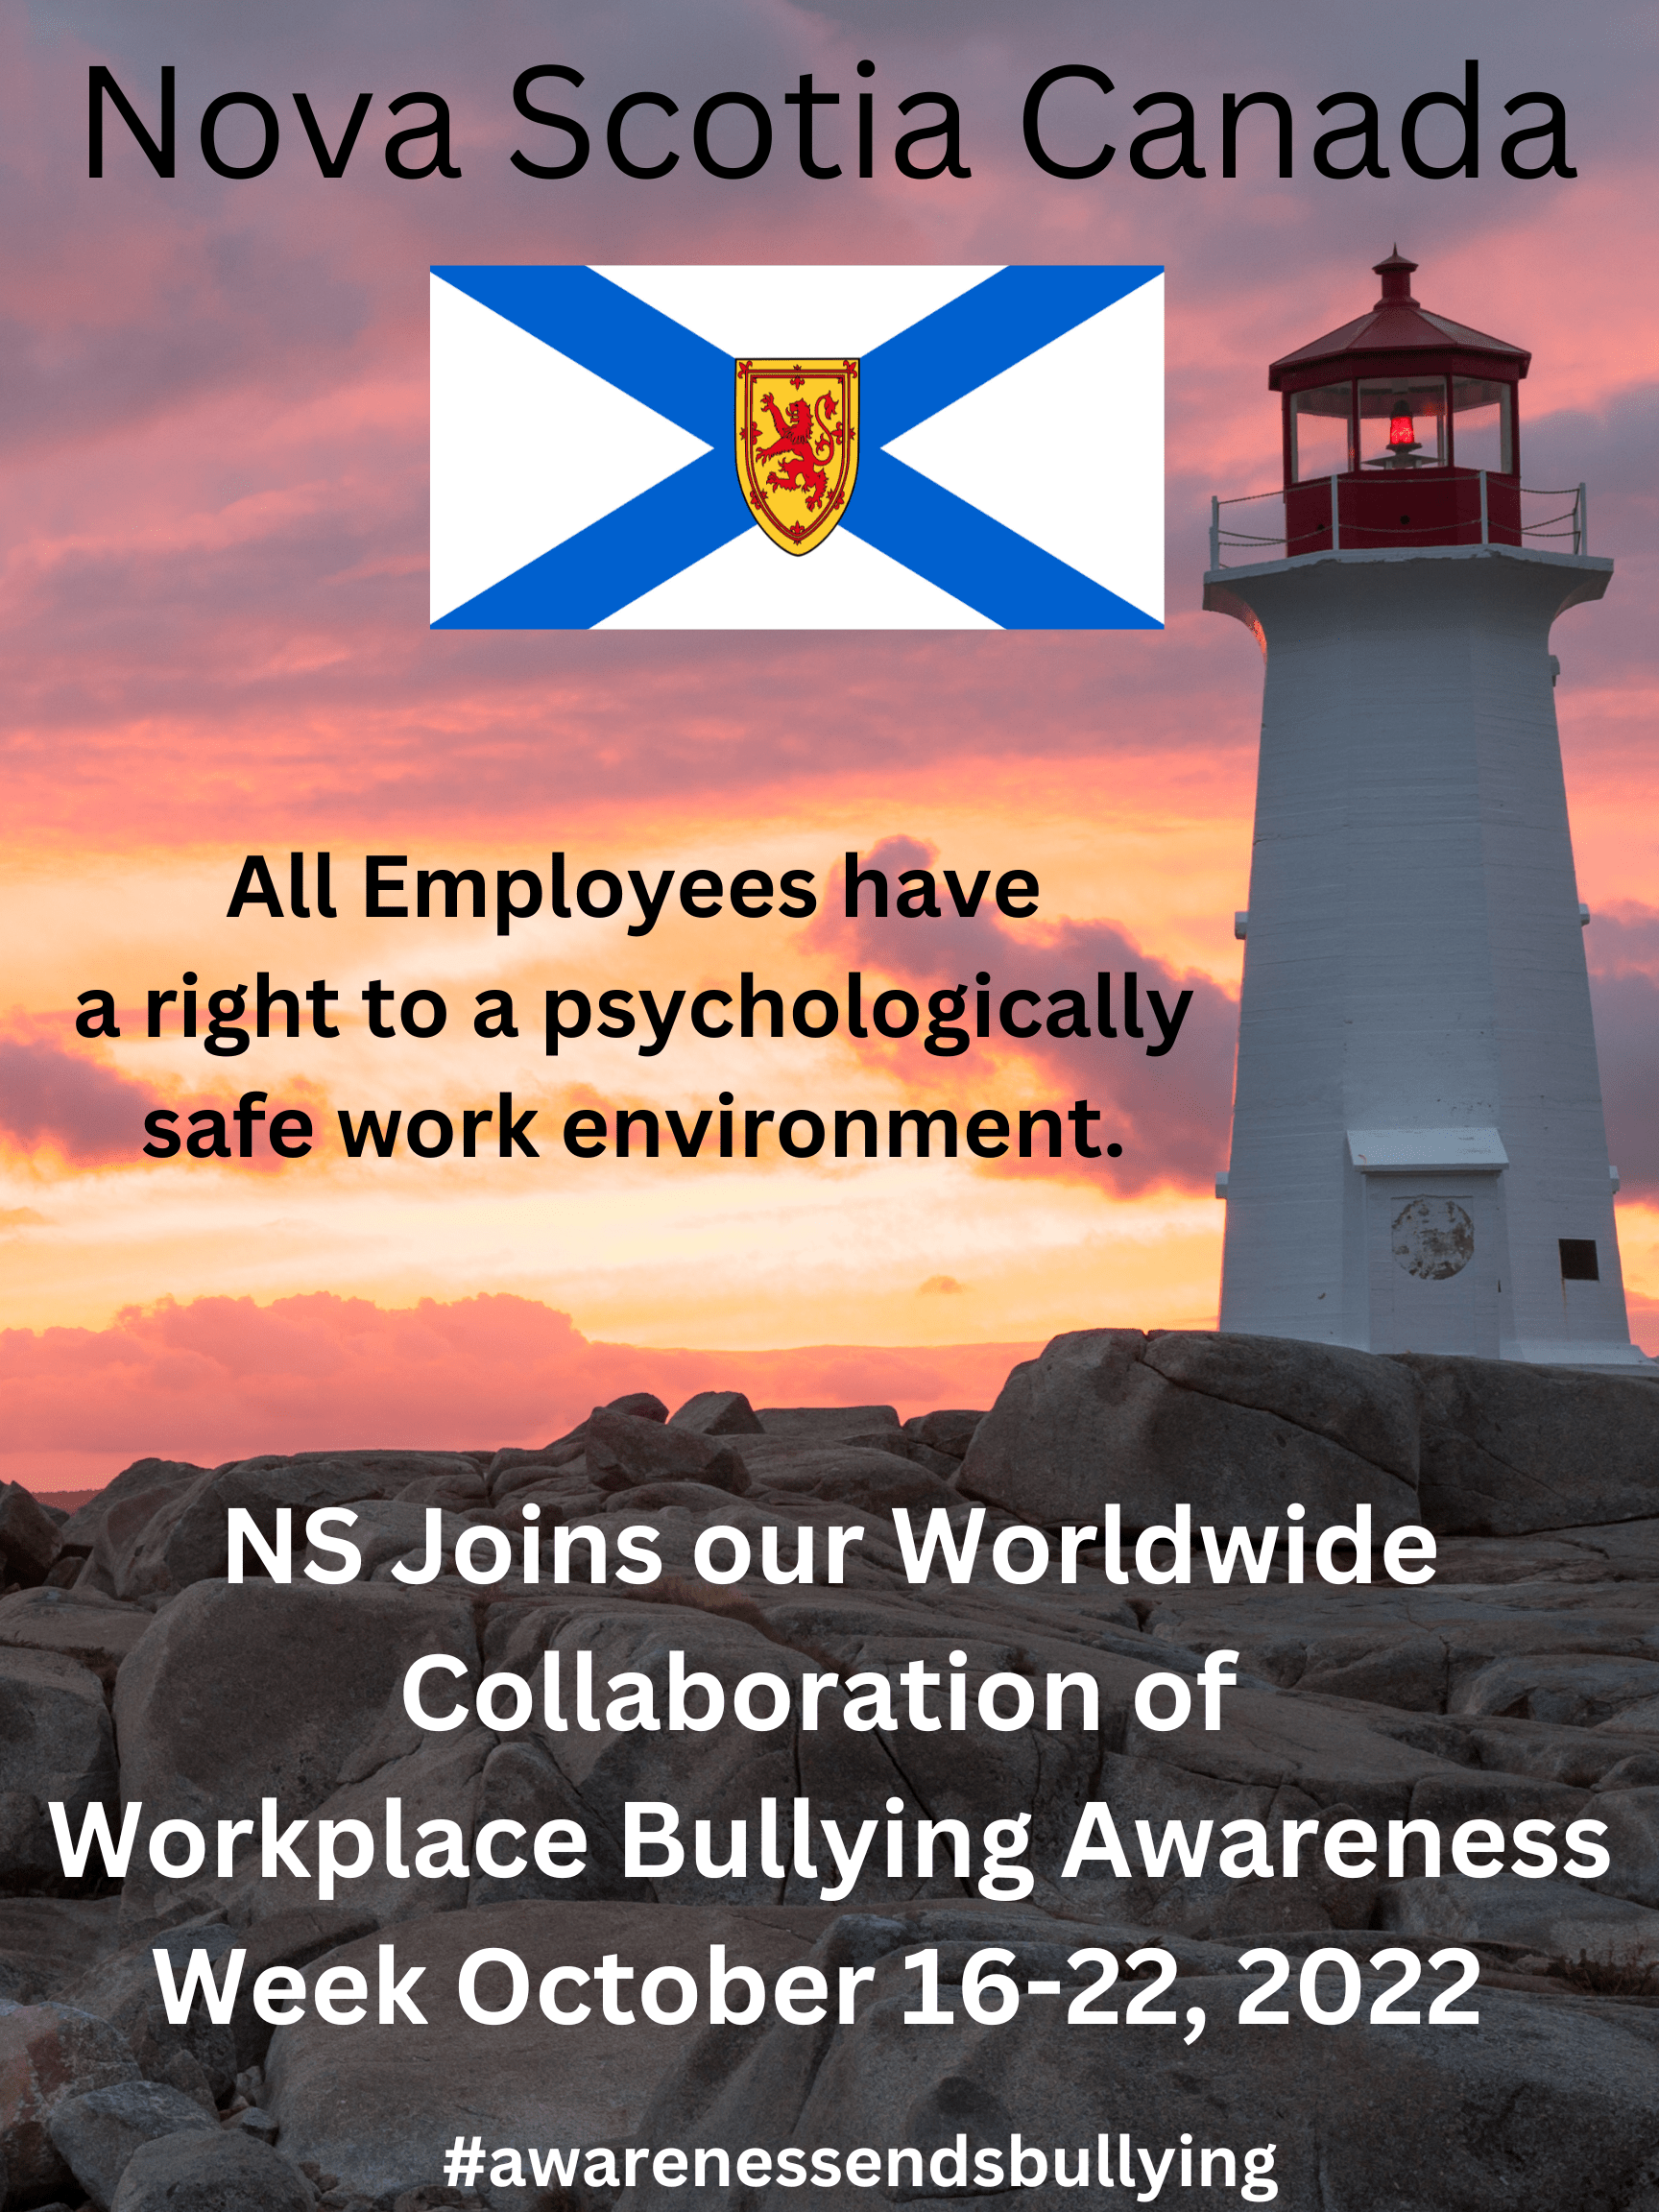 Workplace Bullying Awareness Week 2022, Nova Scotia